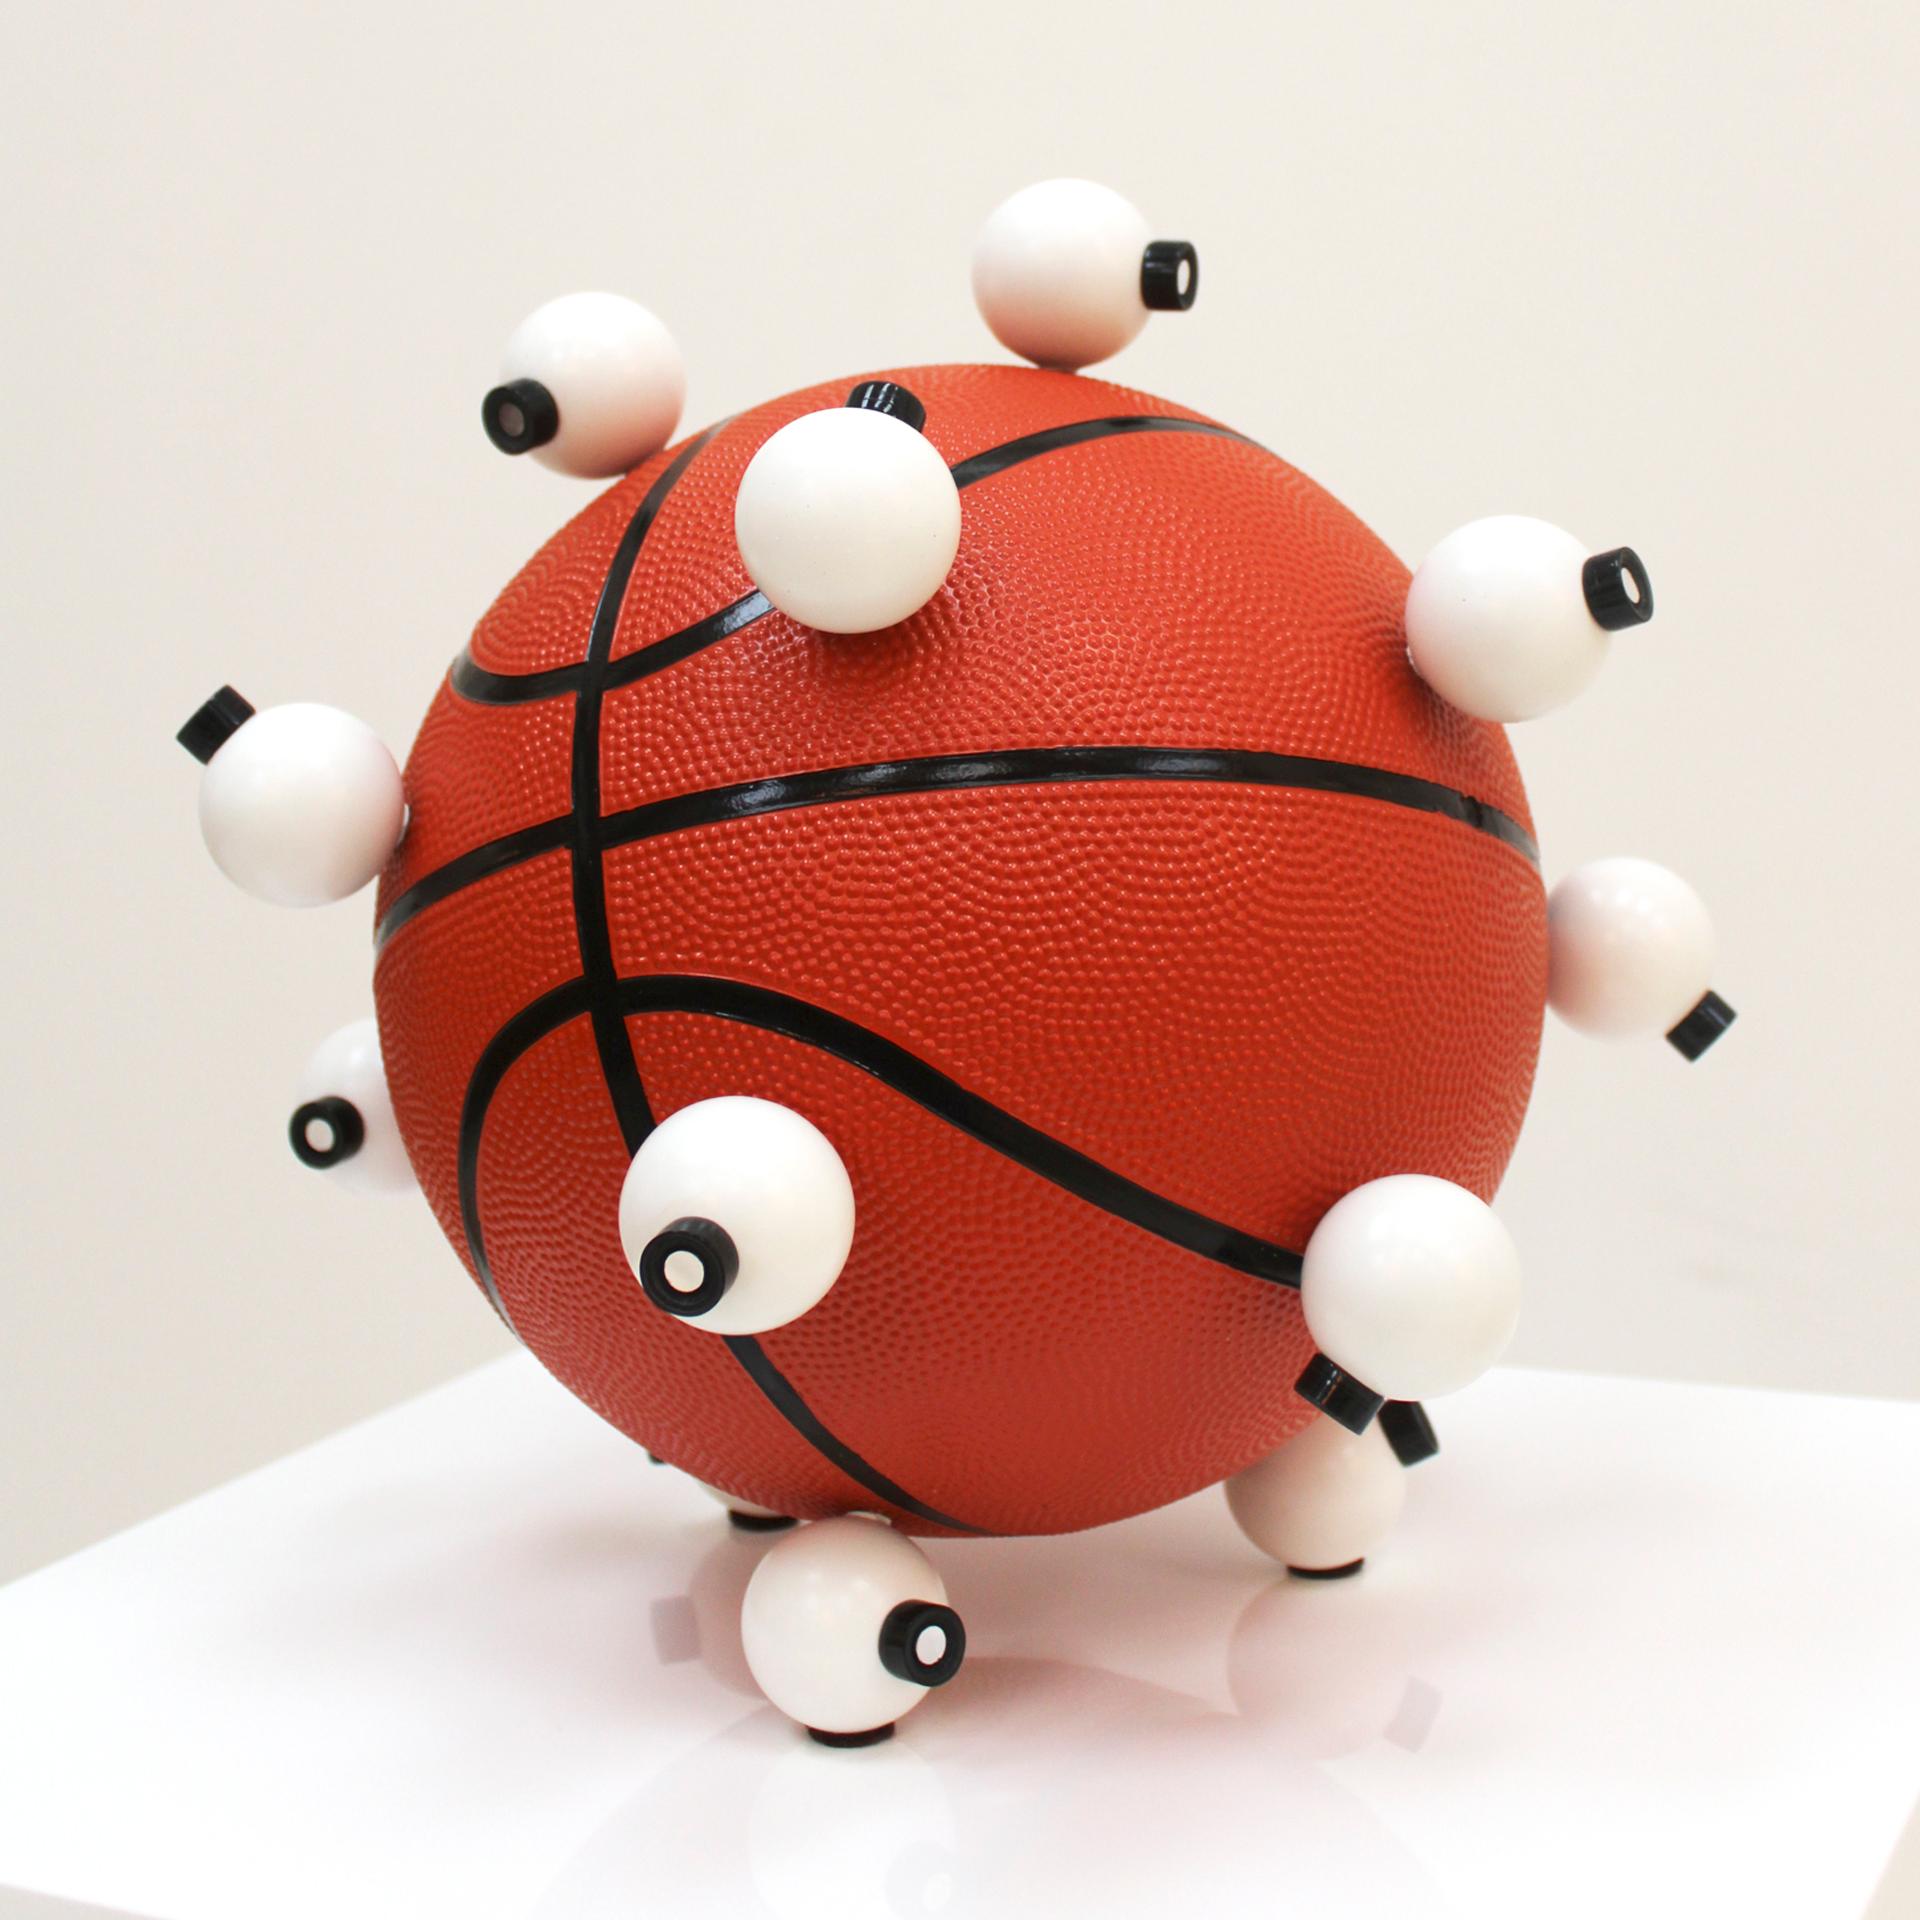 Modern ”Evidence” Bascketball Sculpture made by Alexandre Arrechea For Sale